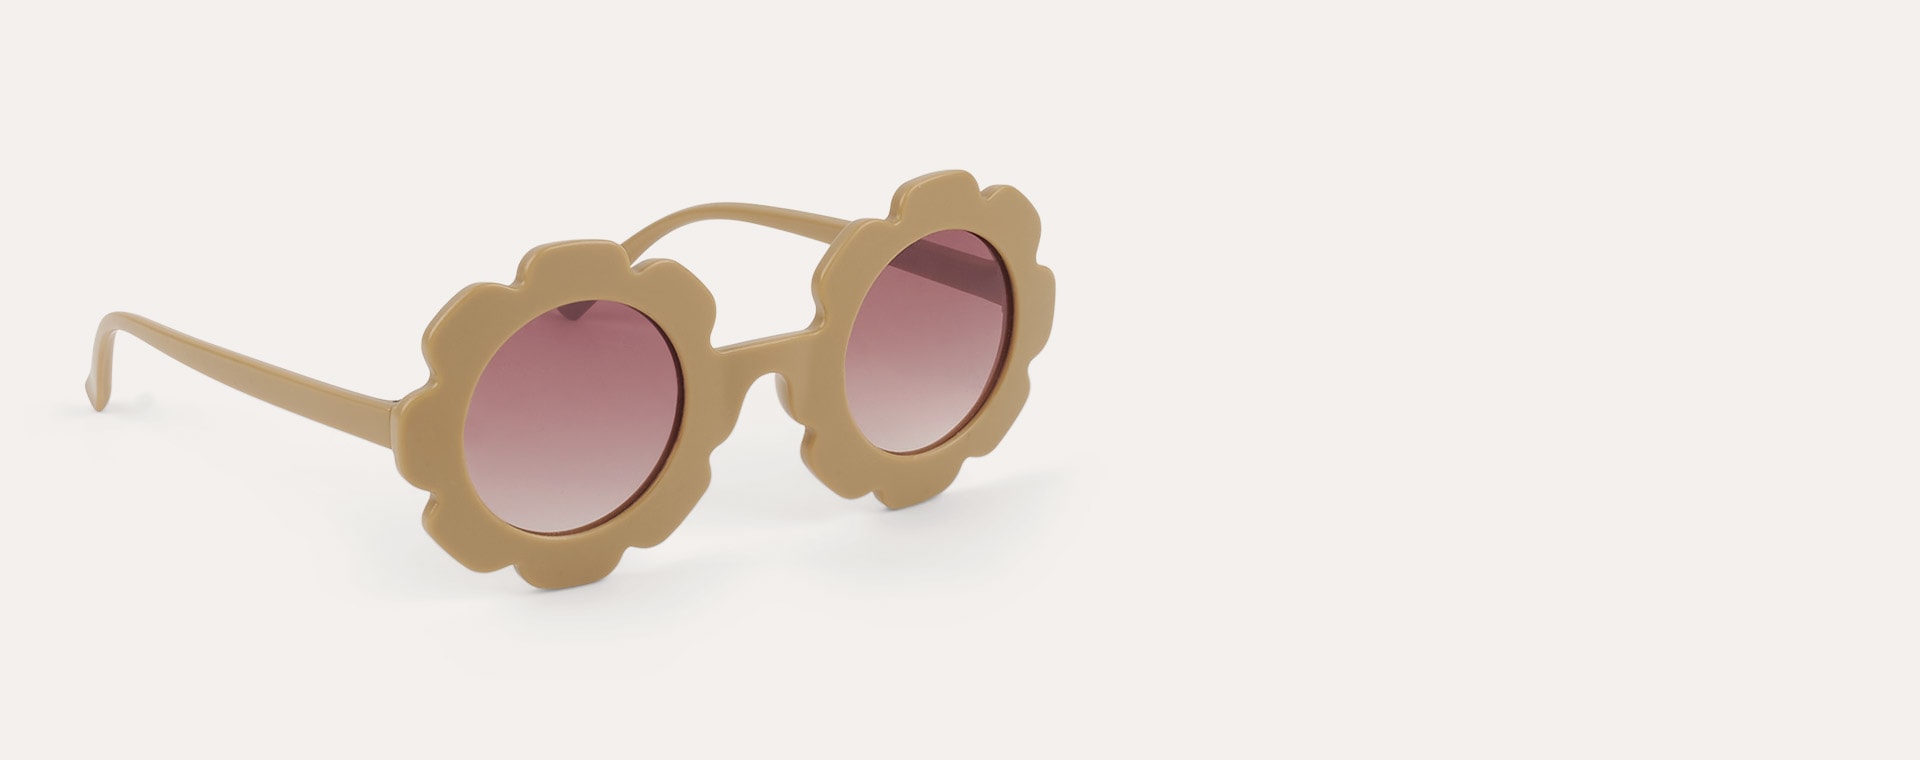 Honey KIDLY Label Flower Sustainable Sunglasses